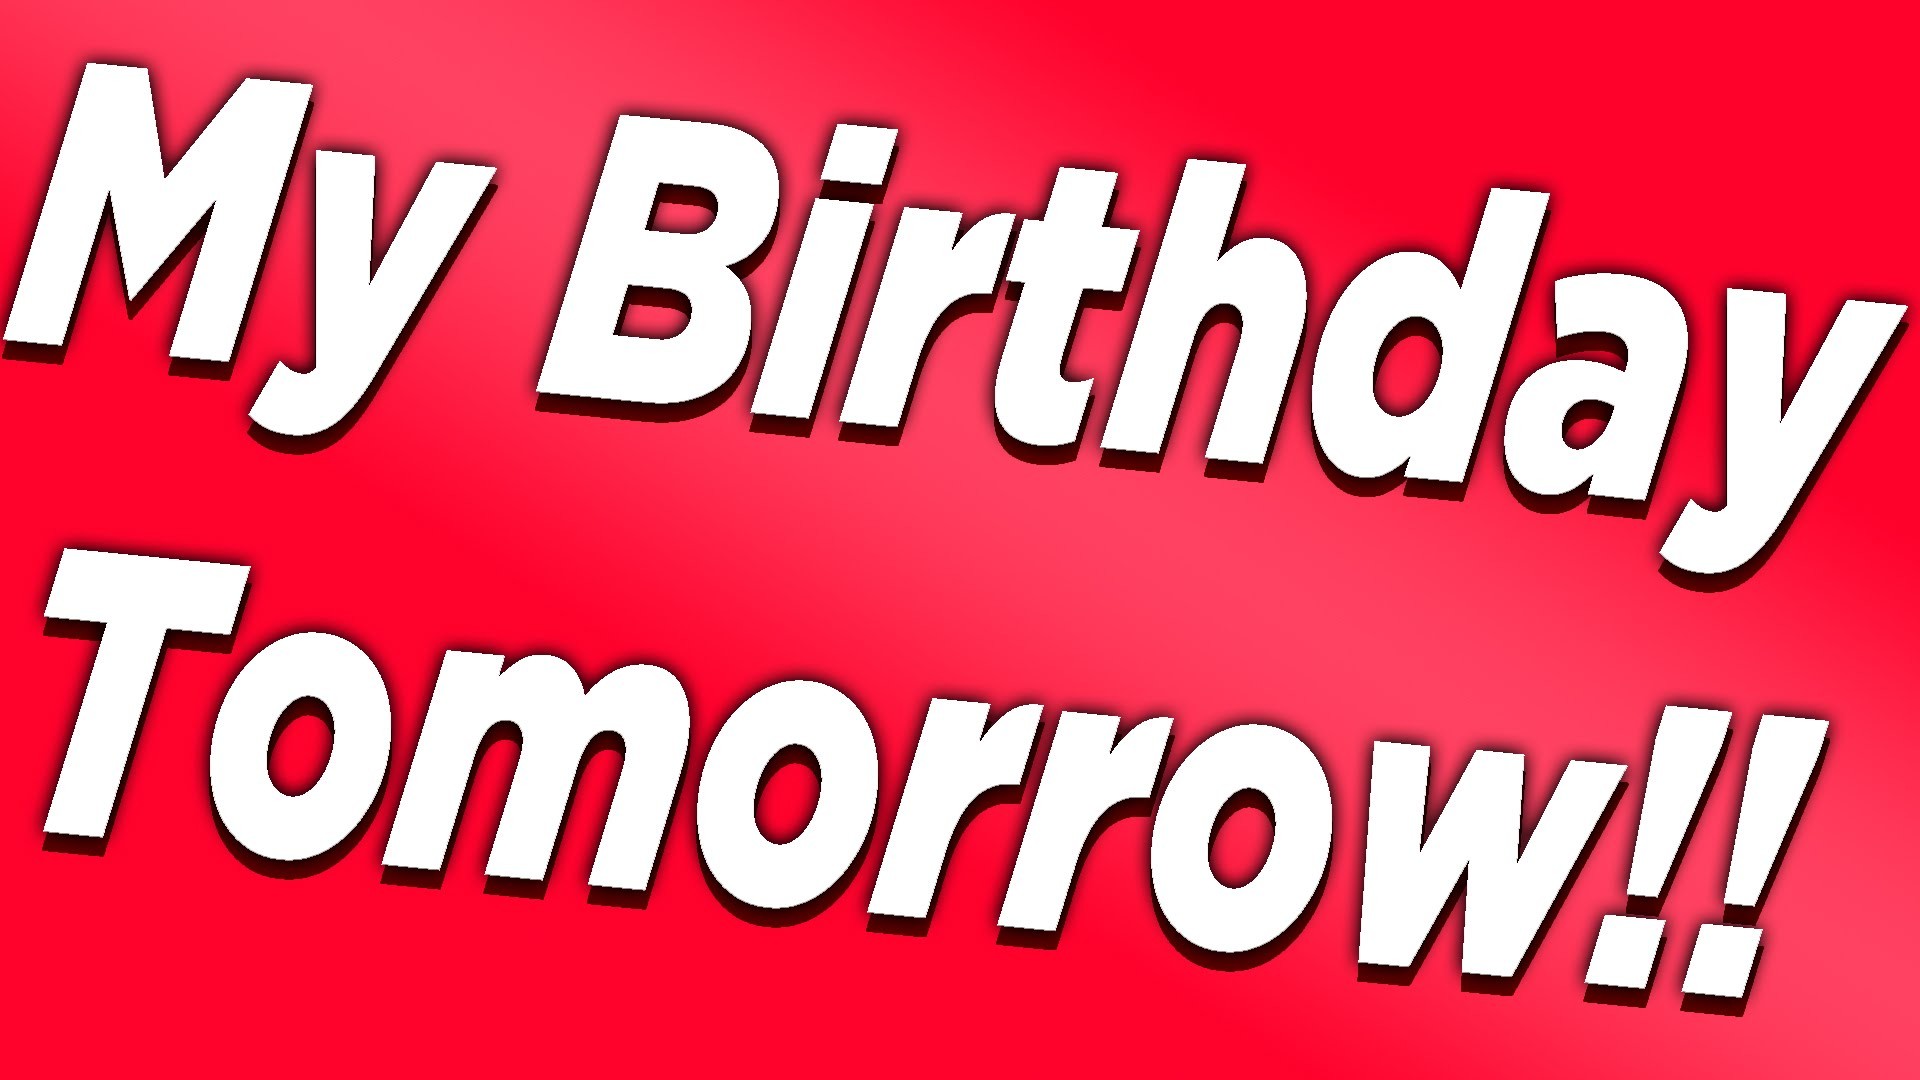 1920x1080 My Birthday Is Tomorrow!